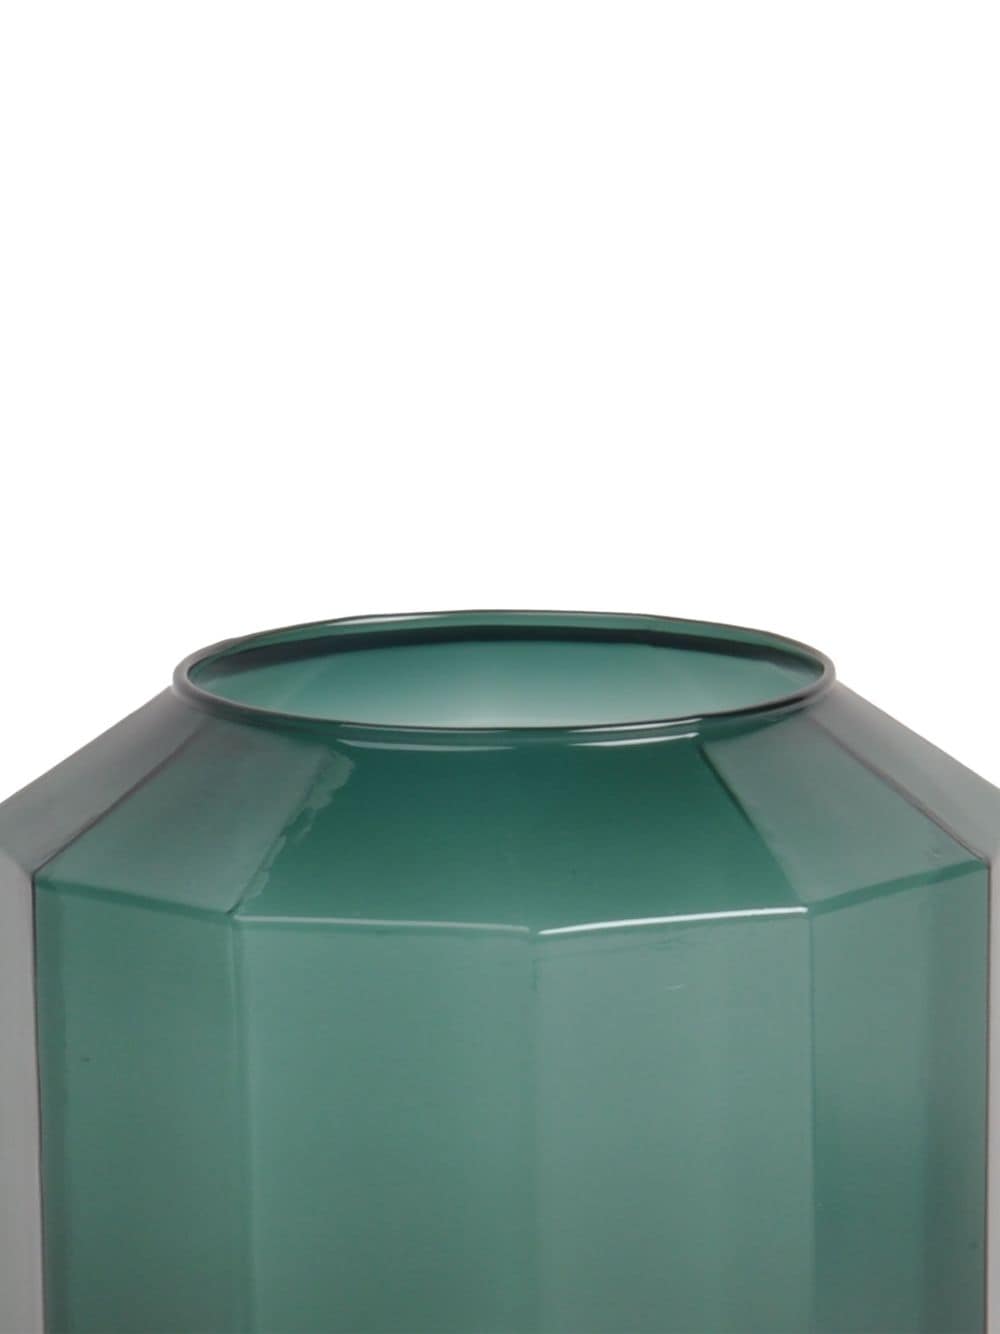 XLBoom Bliss kleine glazen vaas (14 cm x 16 cm) - Groen